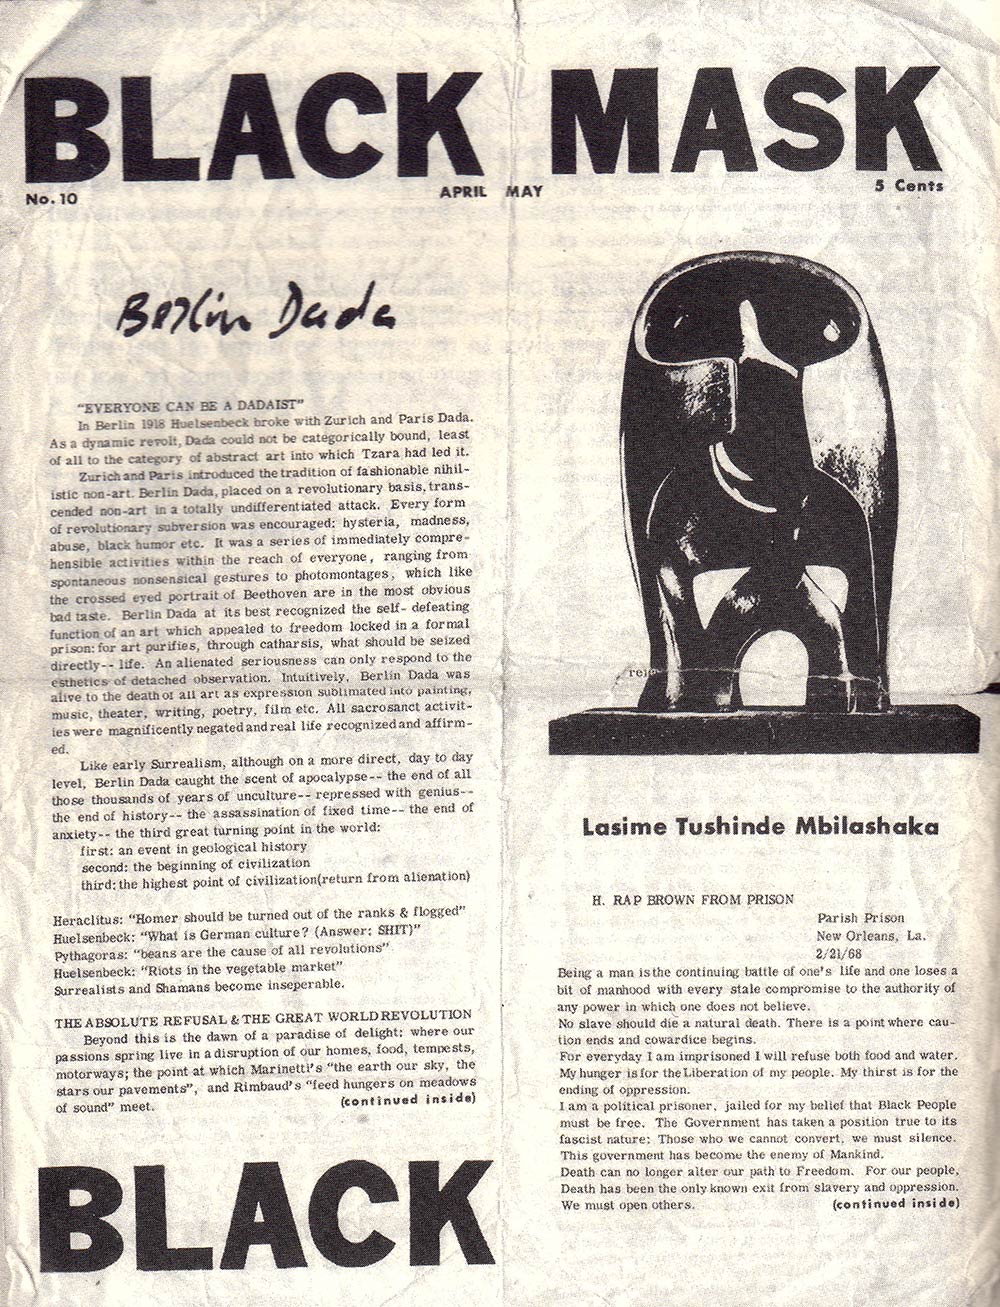 Black Mask, Black Mask 10, April/May 1968.